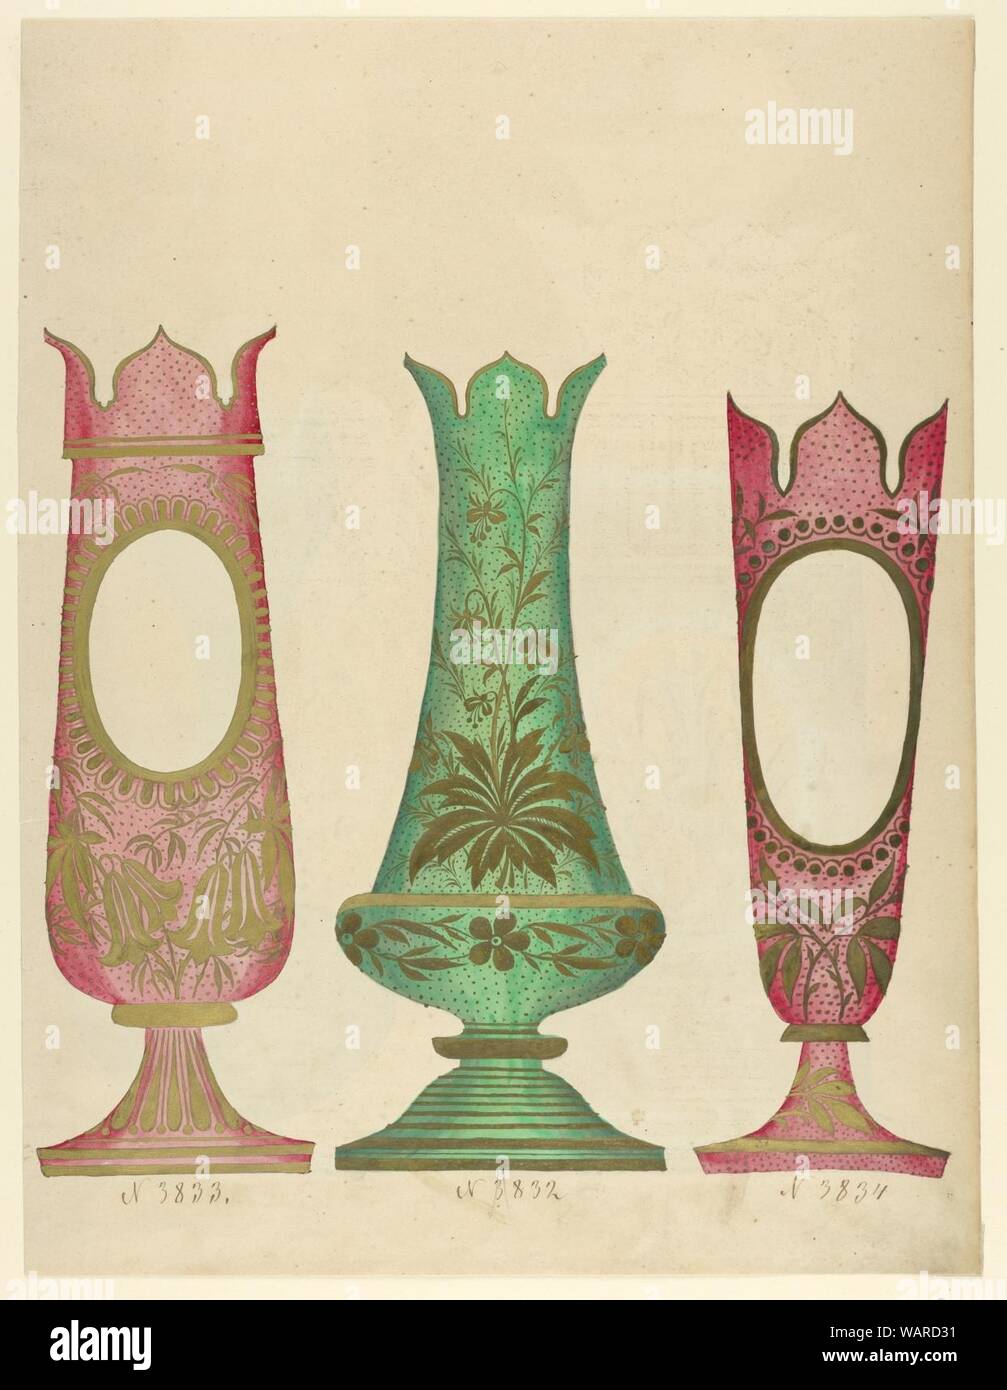 Vaso in vetro trasparente alto – Carini – The House of Vintage